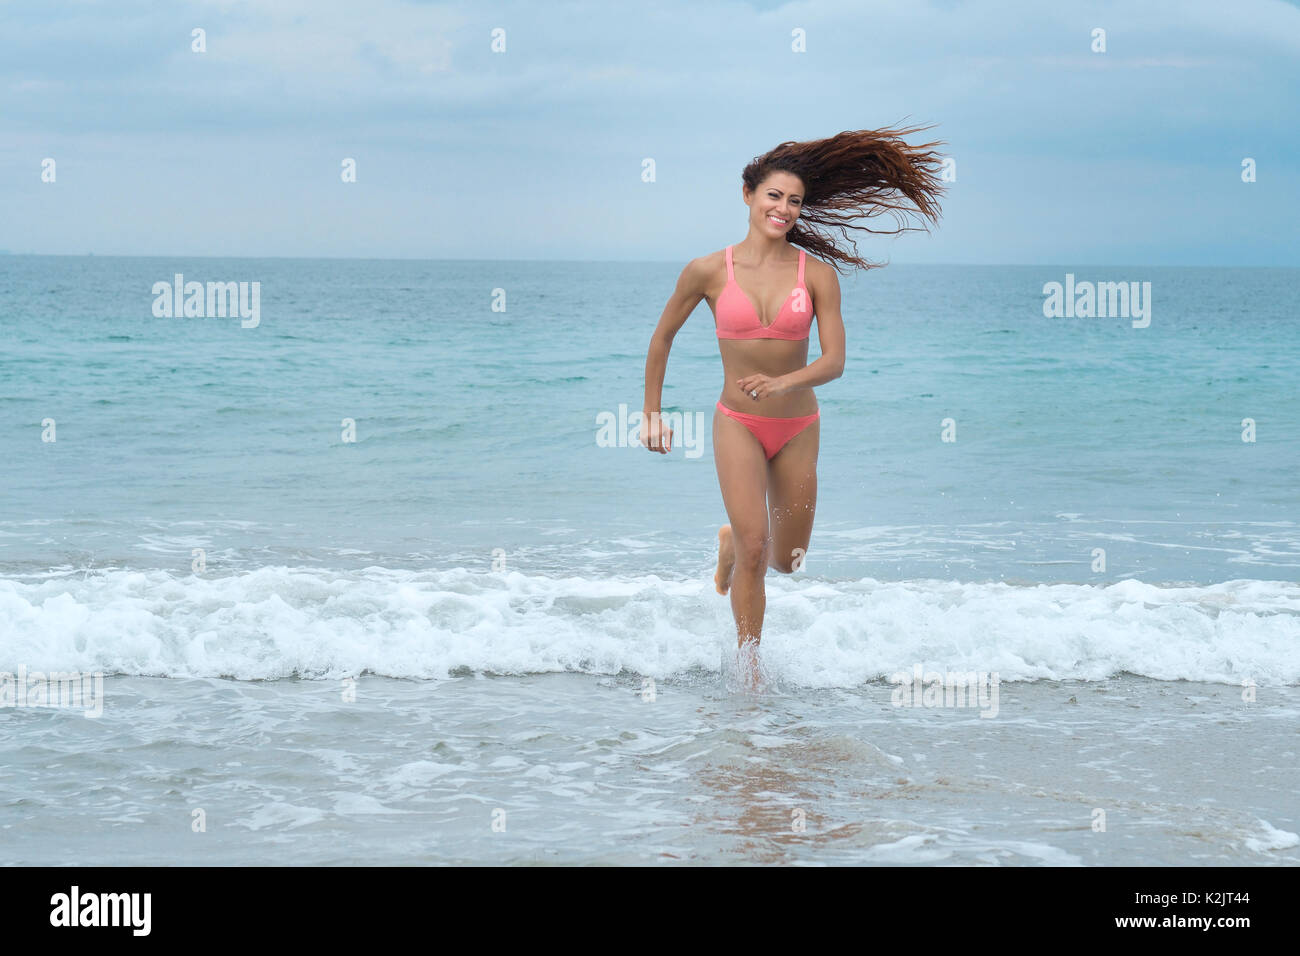 Attractive woman in bikini running at a beach Stock Photo